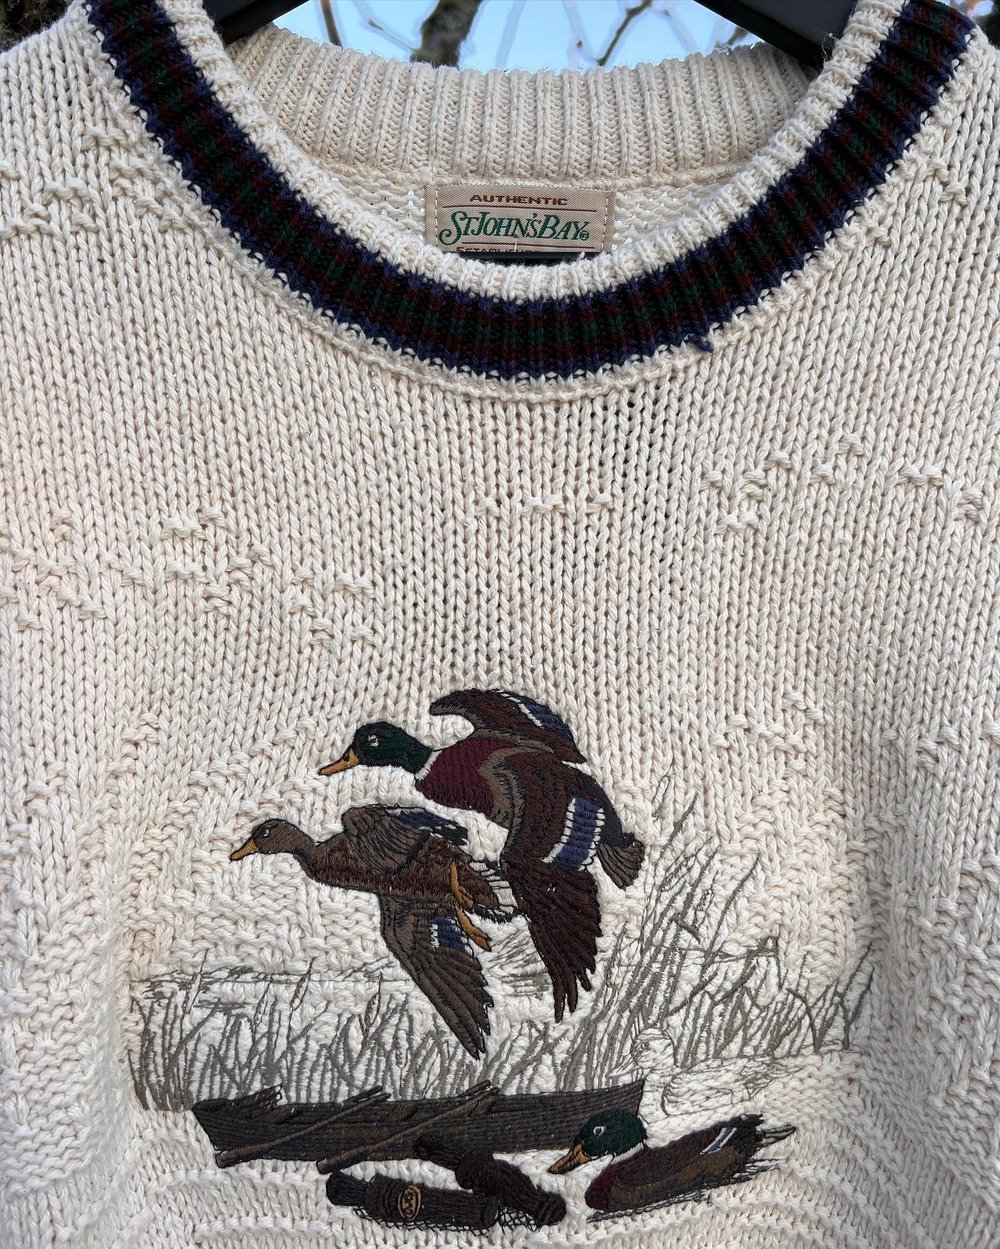 Vintage St. John’s Bay Cotton Duck Sweater (L)